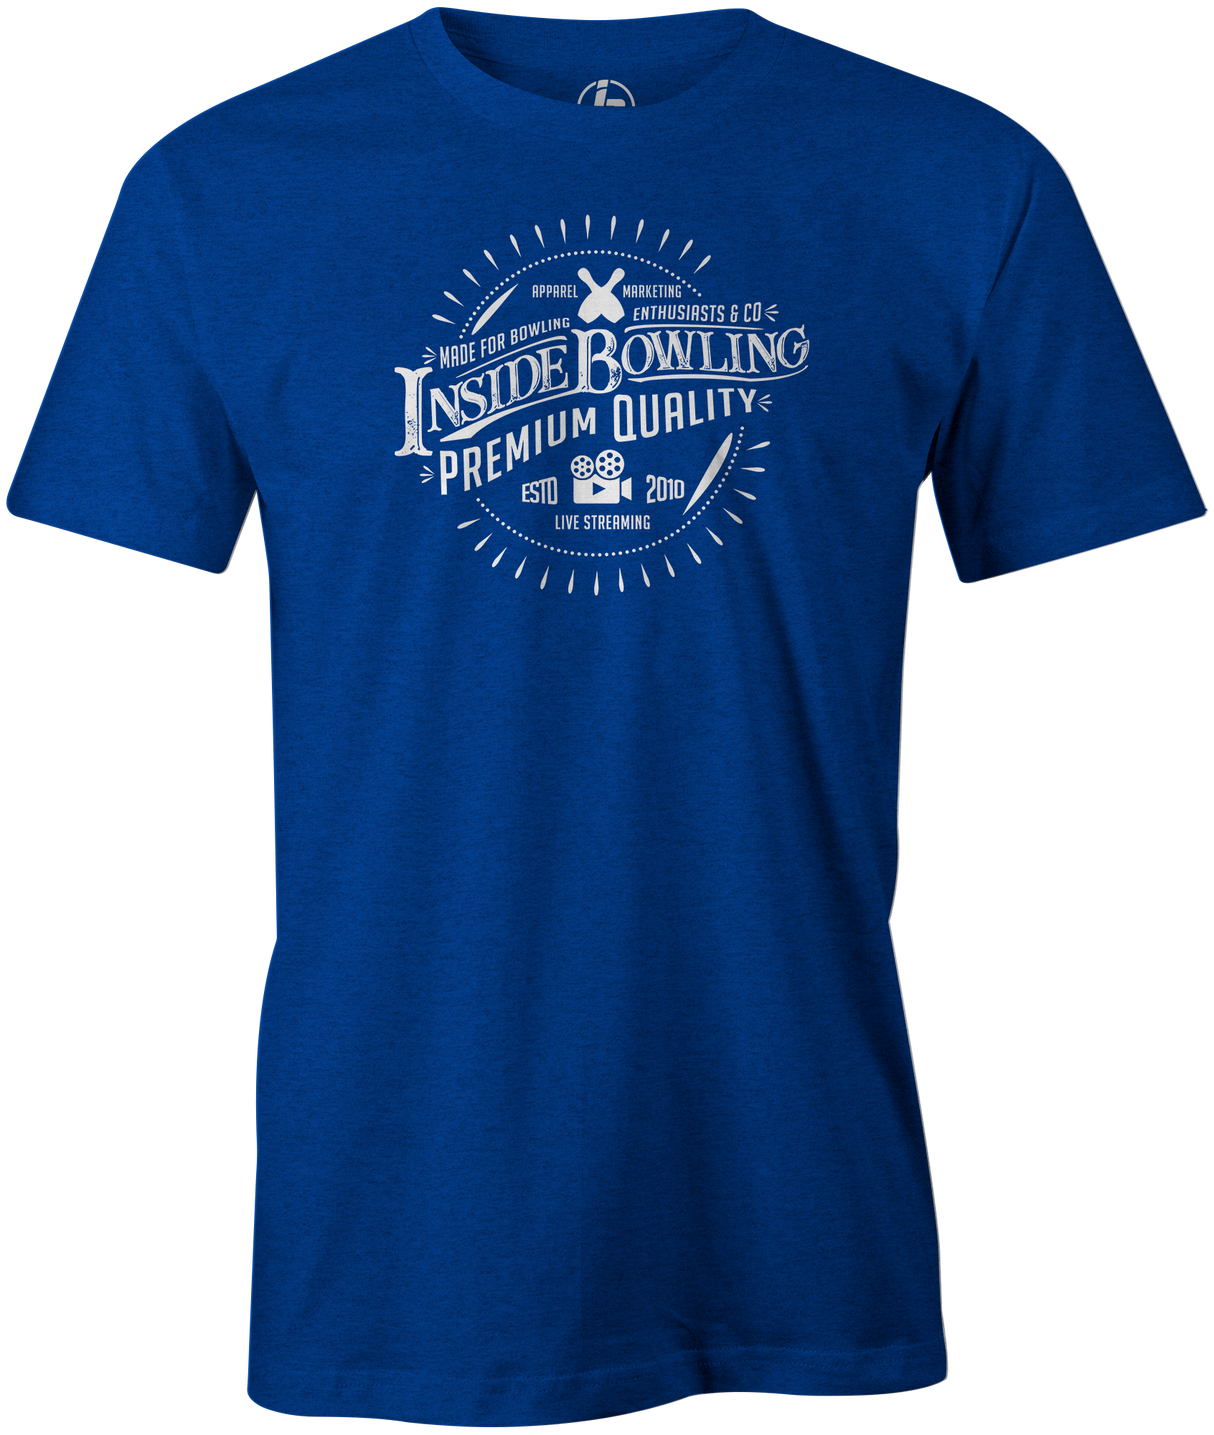 Inside Bowling Vintage Men's T-Shirt, Blue, tee, tee-shirt, teeshirt, tee shirt, tshirt, t shirt, cool, novelty